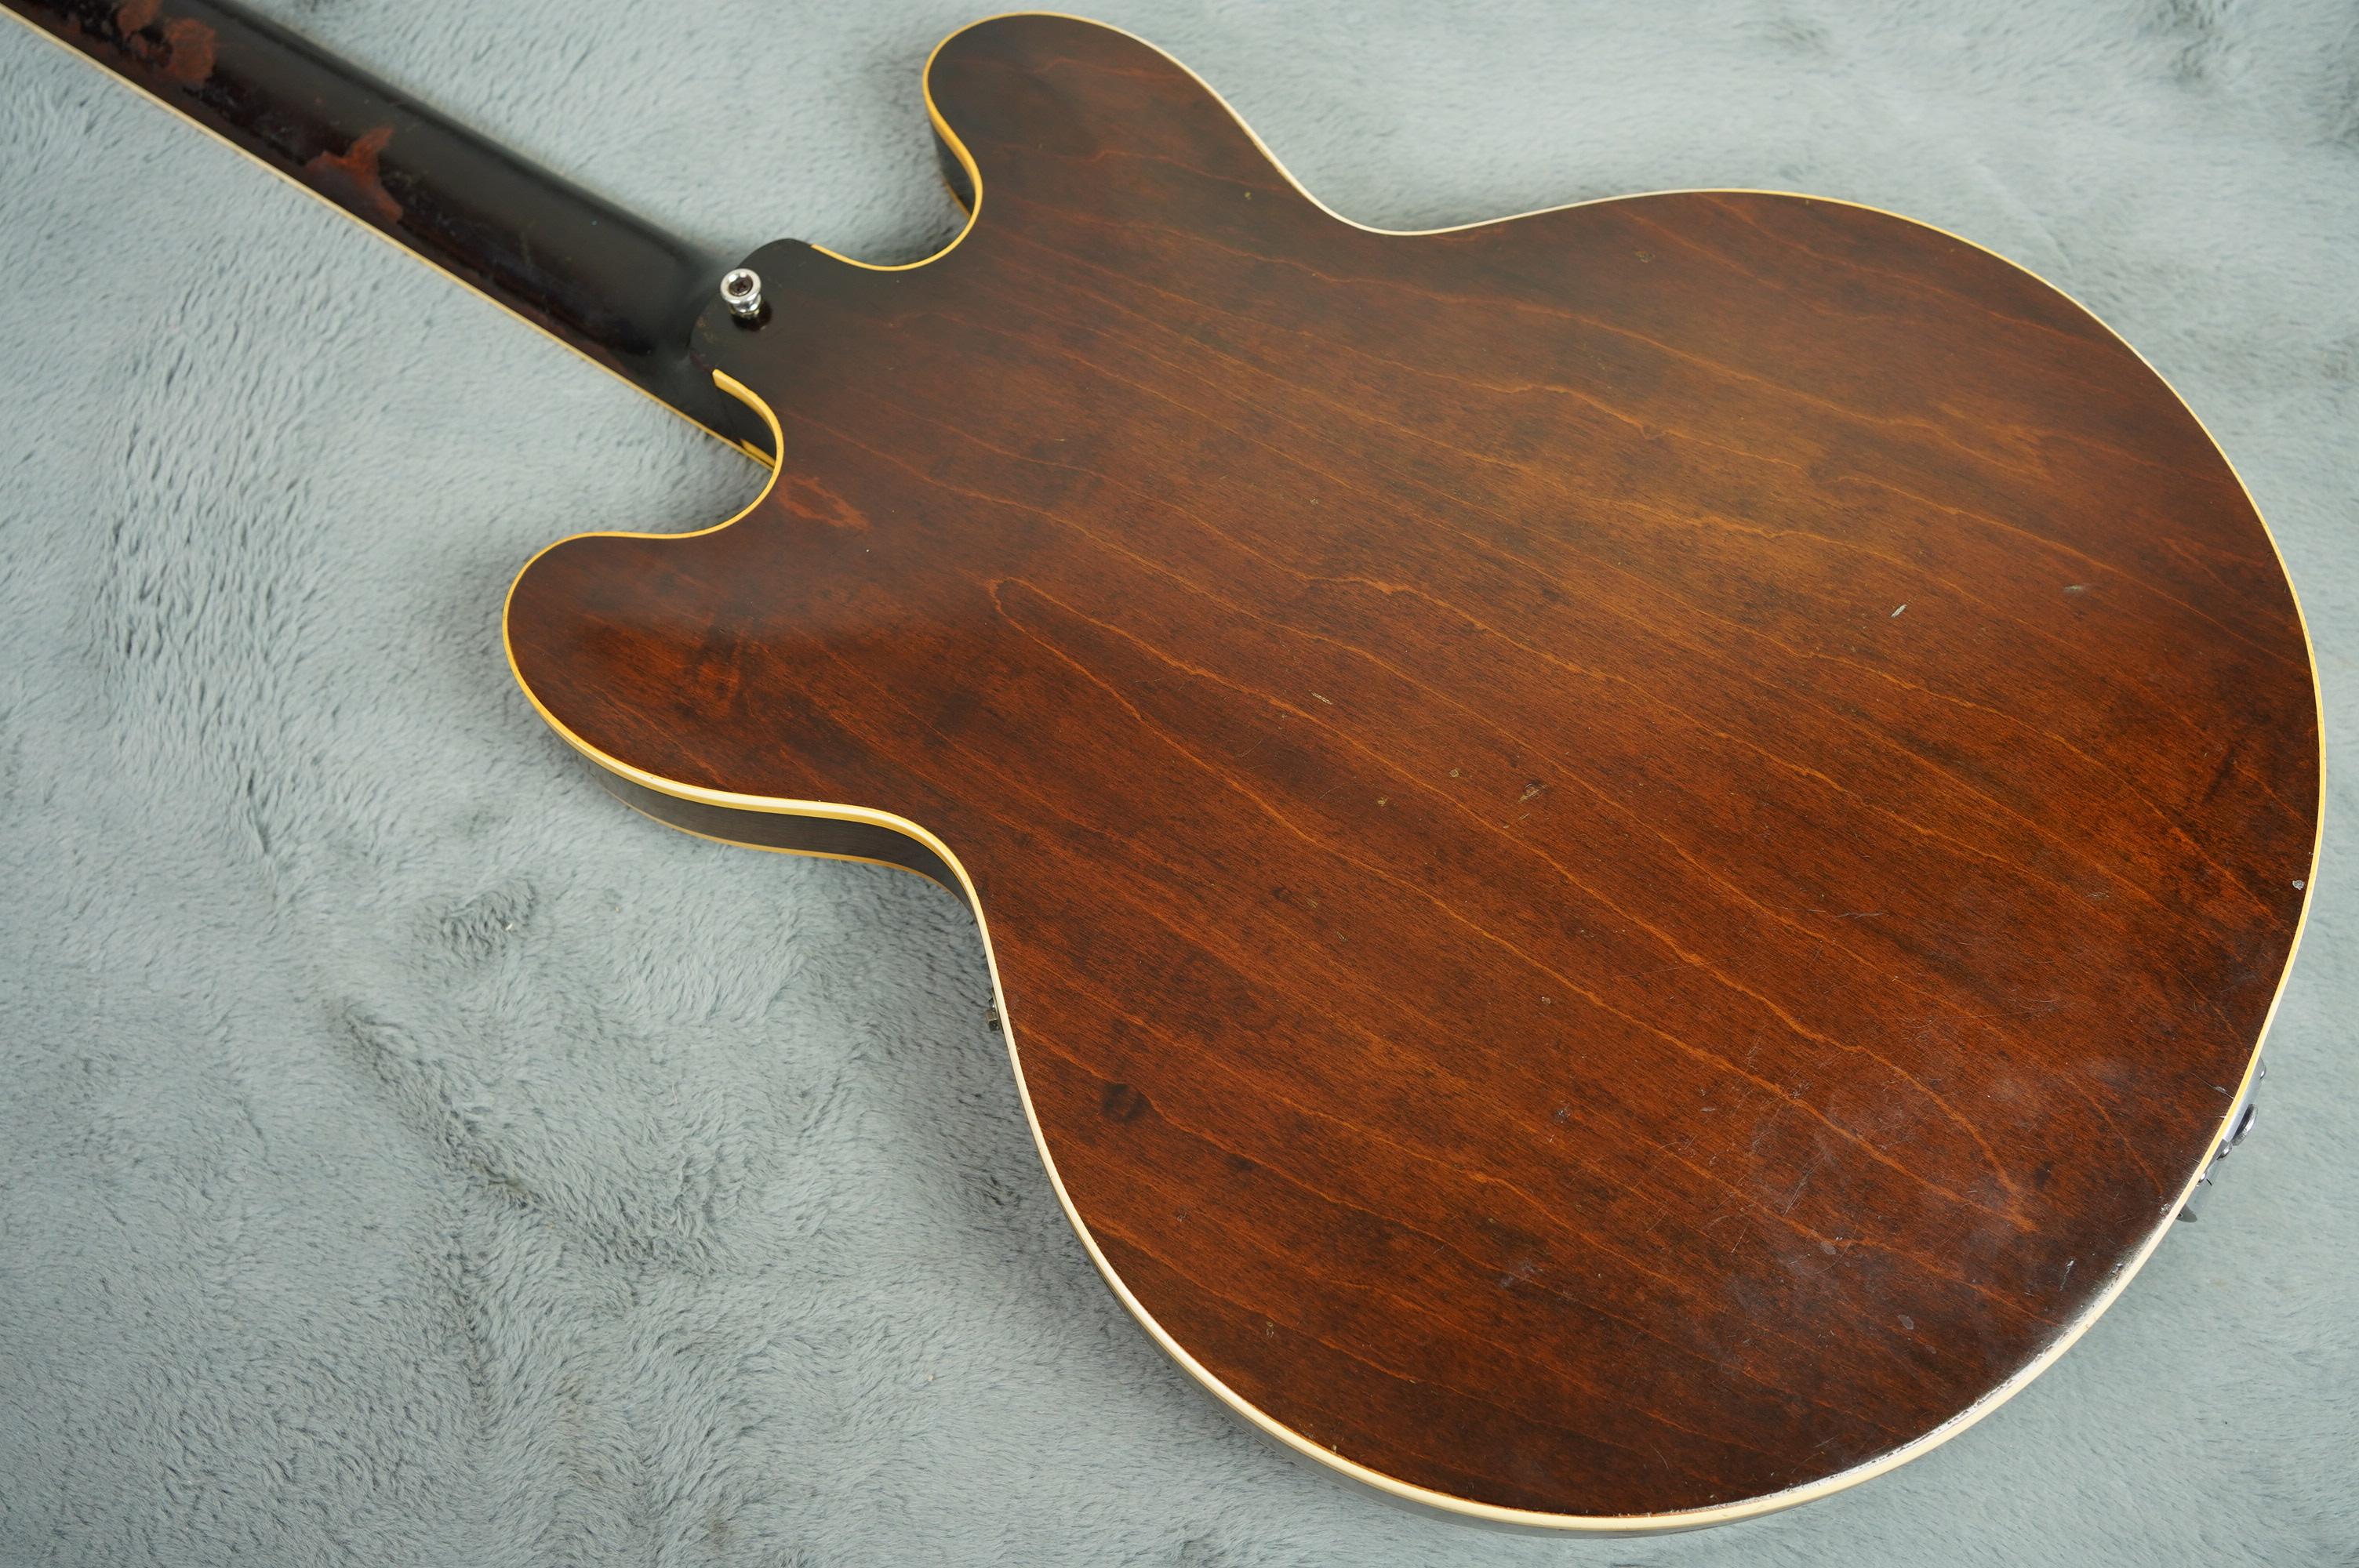 1962 Gibson ES-330 Bigsby